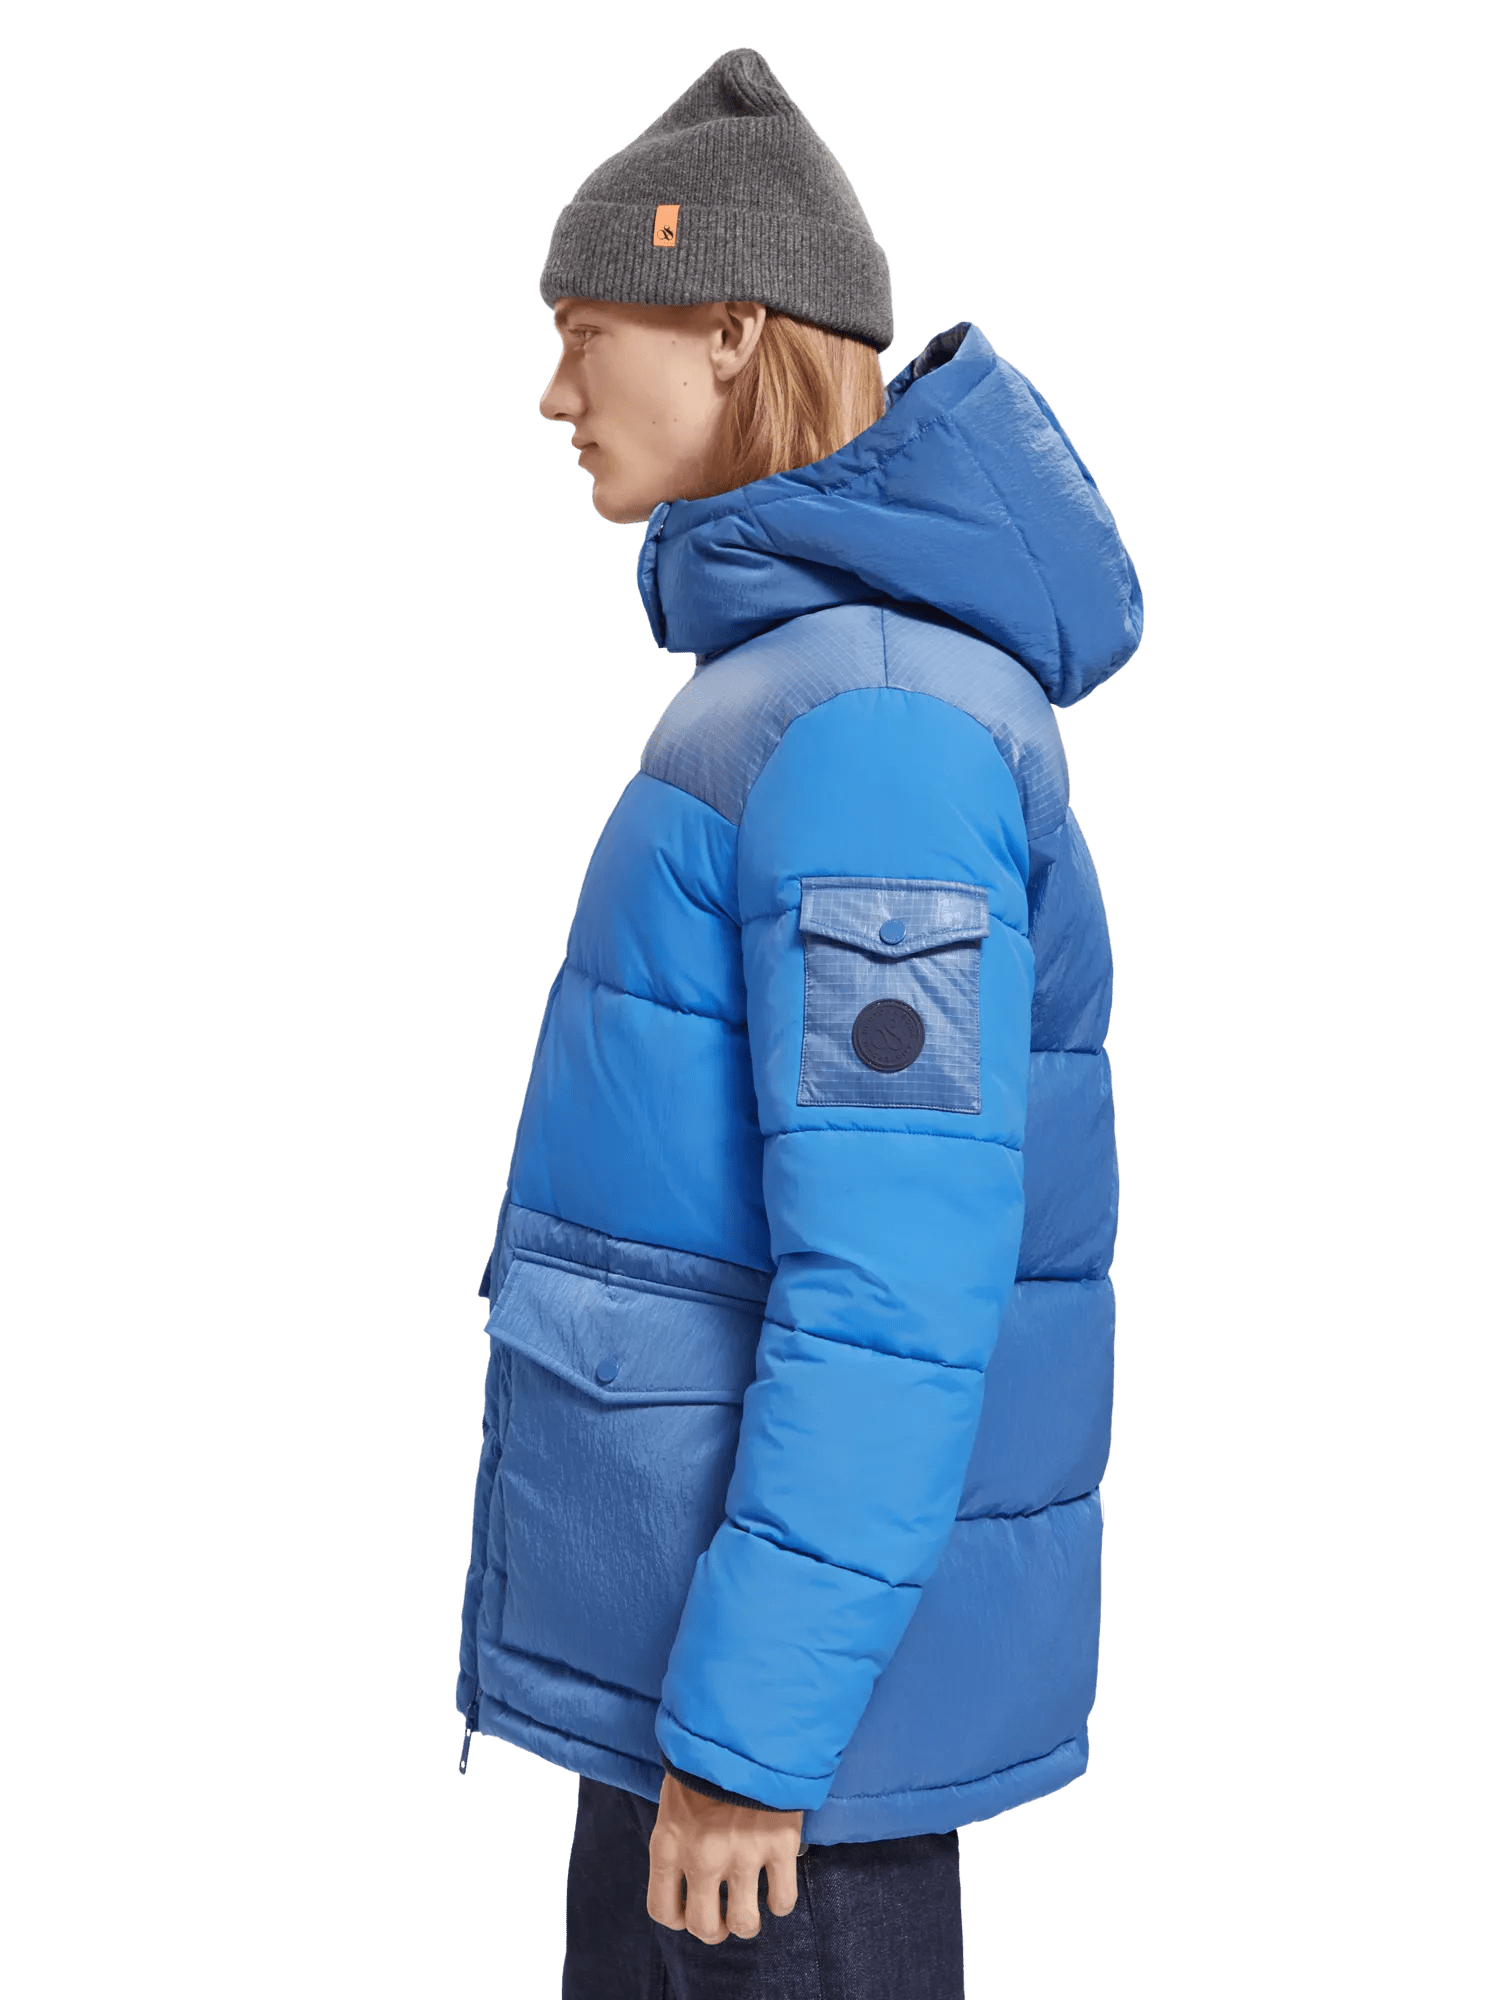 Panelled parka jacket